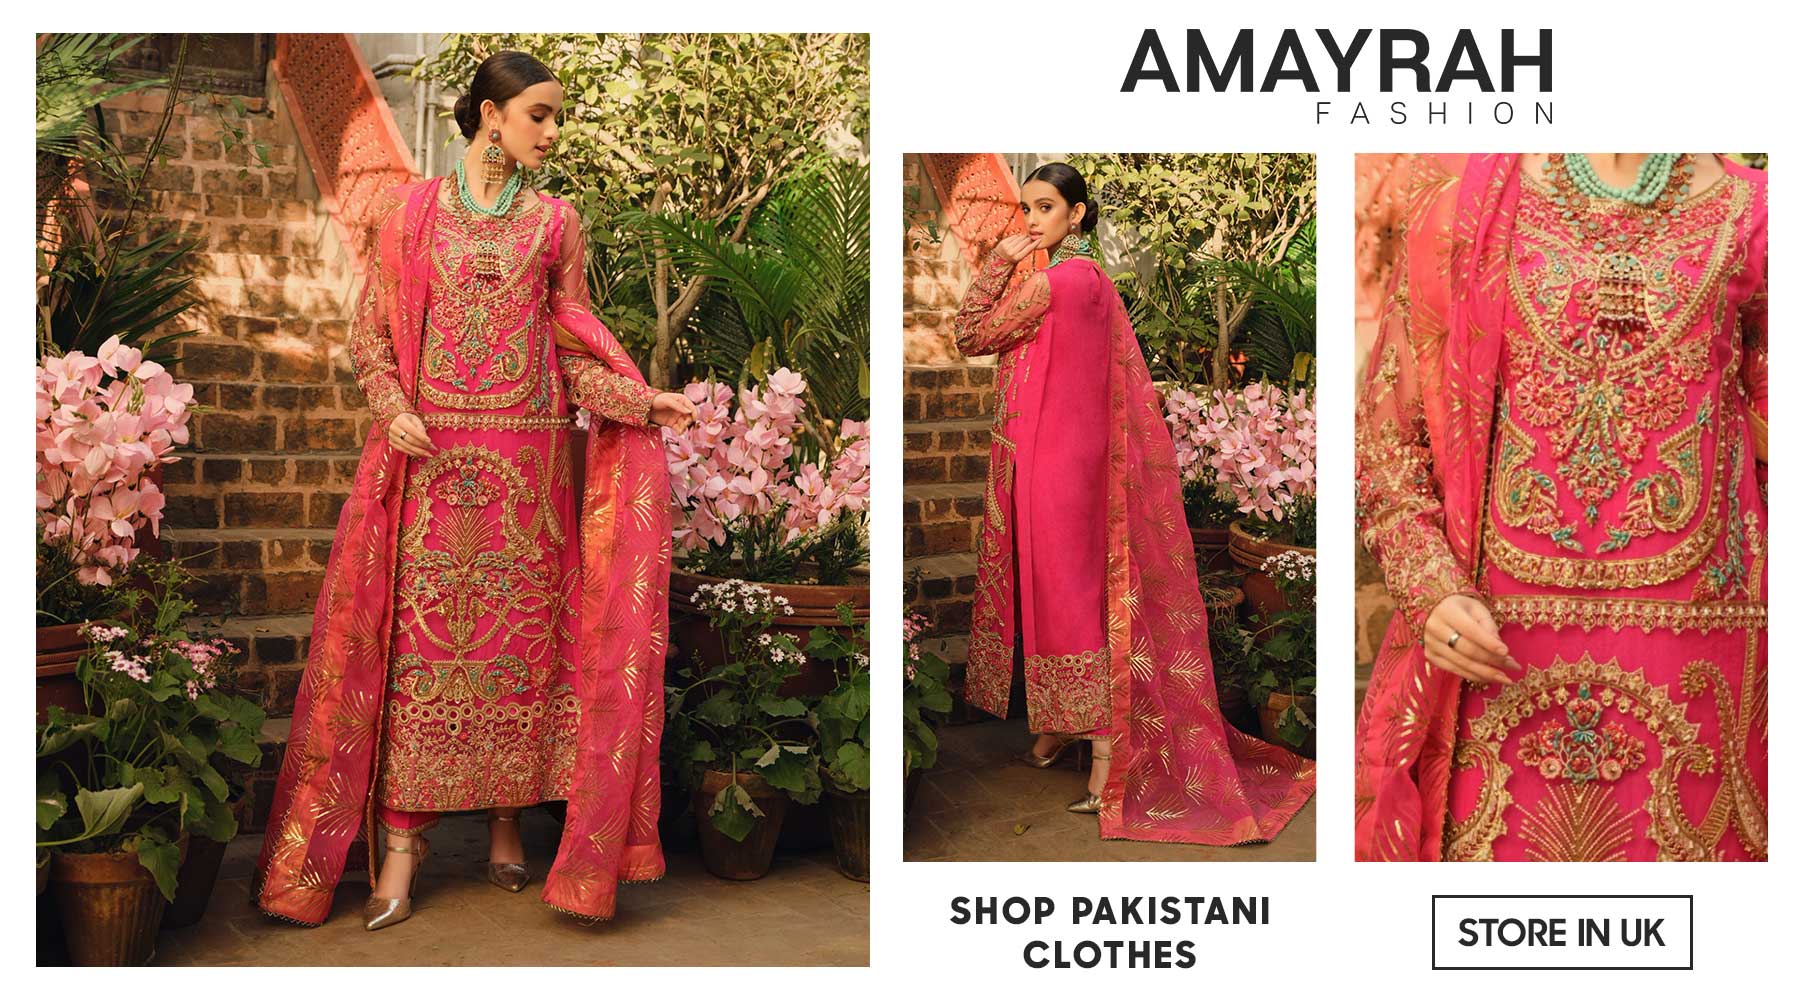 Shop Pakistani Clothes in UK: Discover Amayrah Fashion